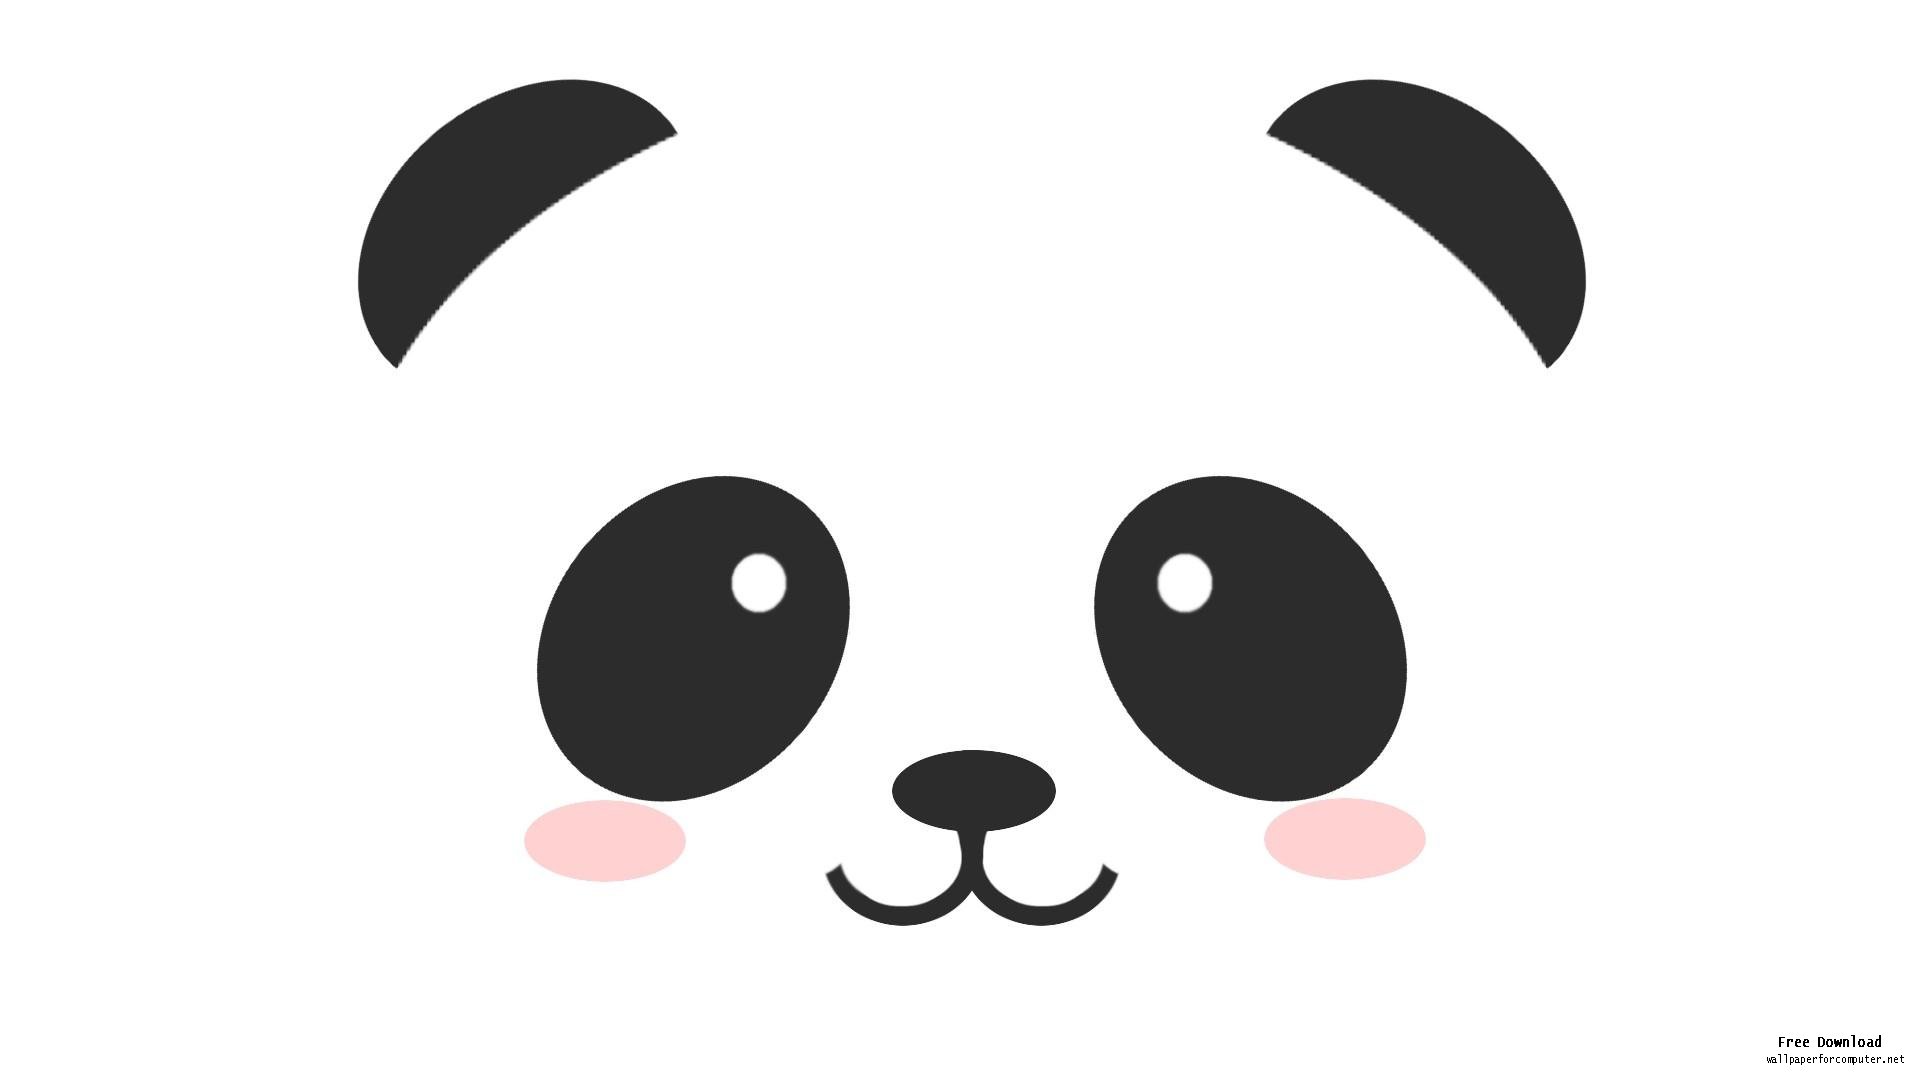 Free Panda Cartoon, Download Free Panda Cartoon png images, Free ClipArts  on Clipart Library